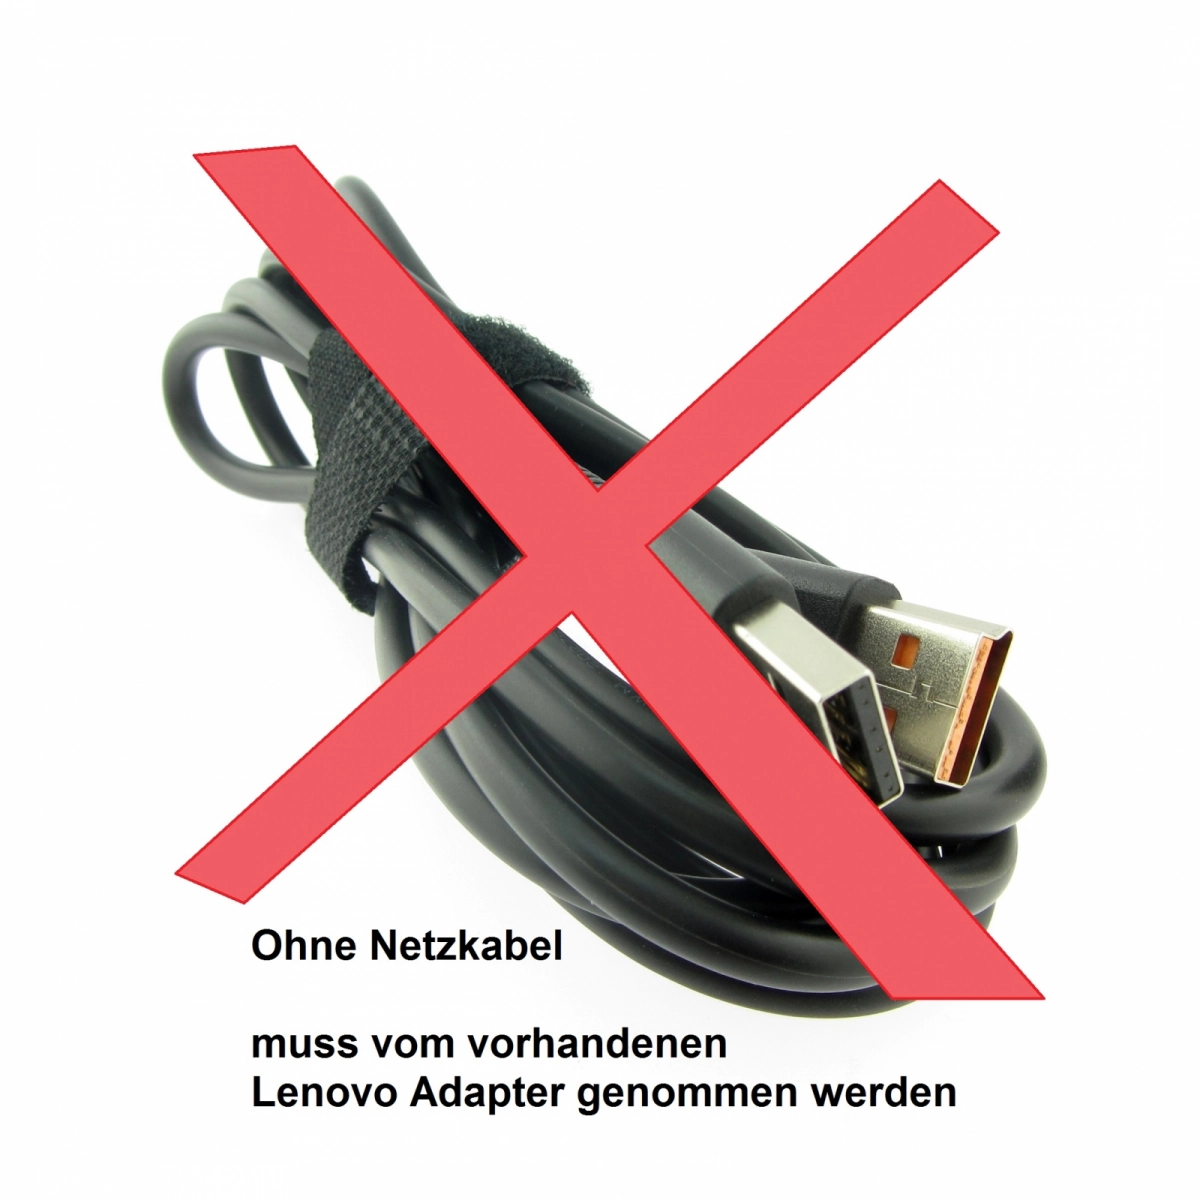 Original Netzteil für LENOVO ADL40WDC 36200567, 20V, 2A, Stecker USB, ohne USB-Kabel